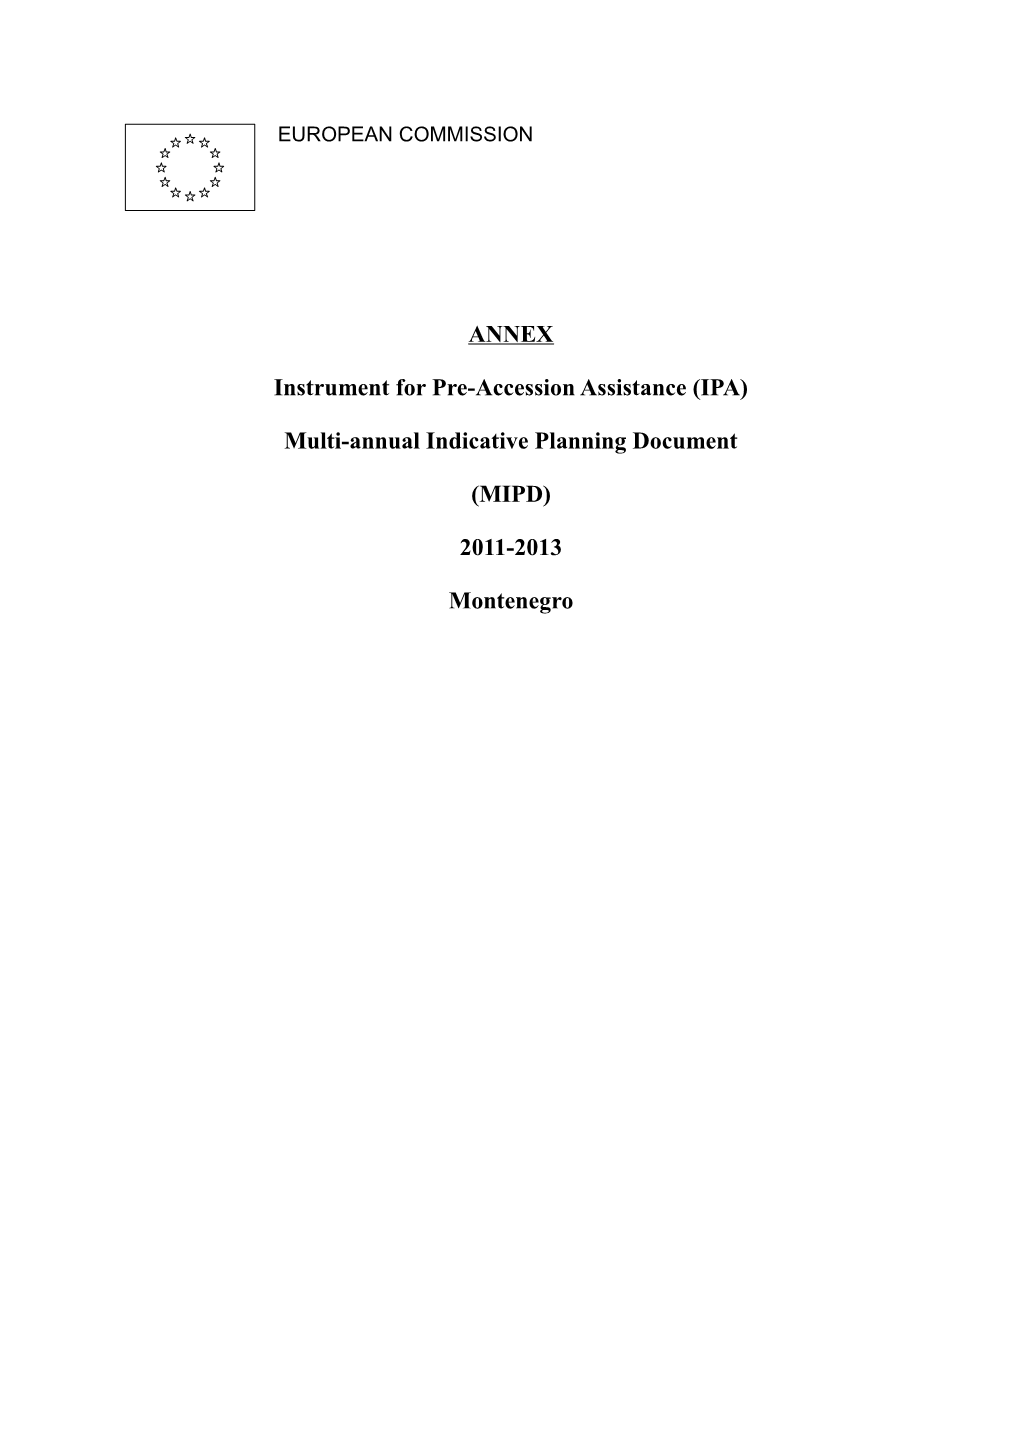 Multi-Annual Indicative Planning Document 2011-2013